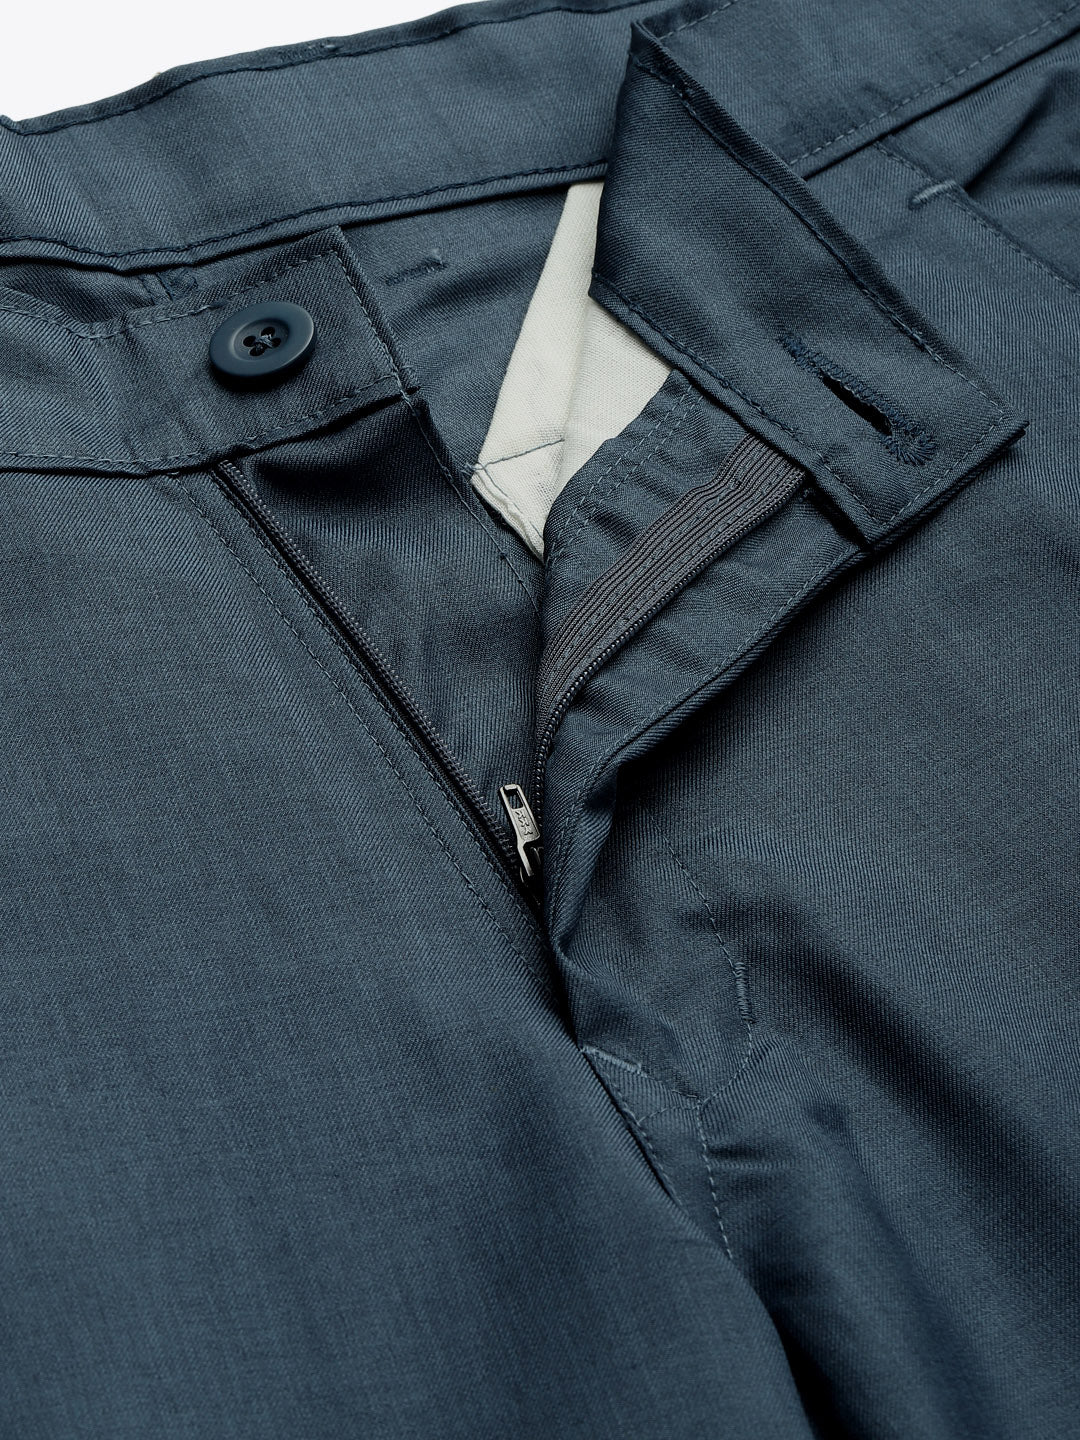 Men's Cotton Blend Teal Blue Solid Casual Trouser - Sojanya